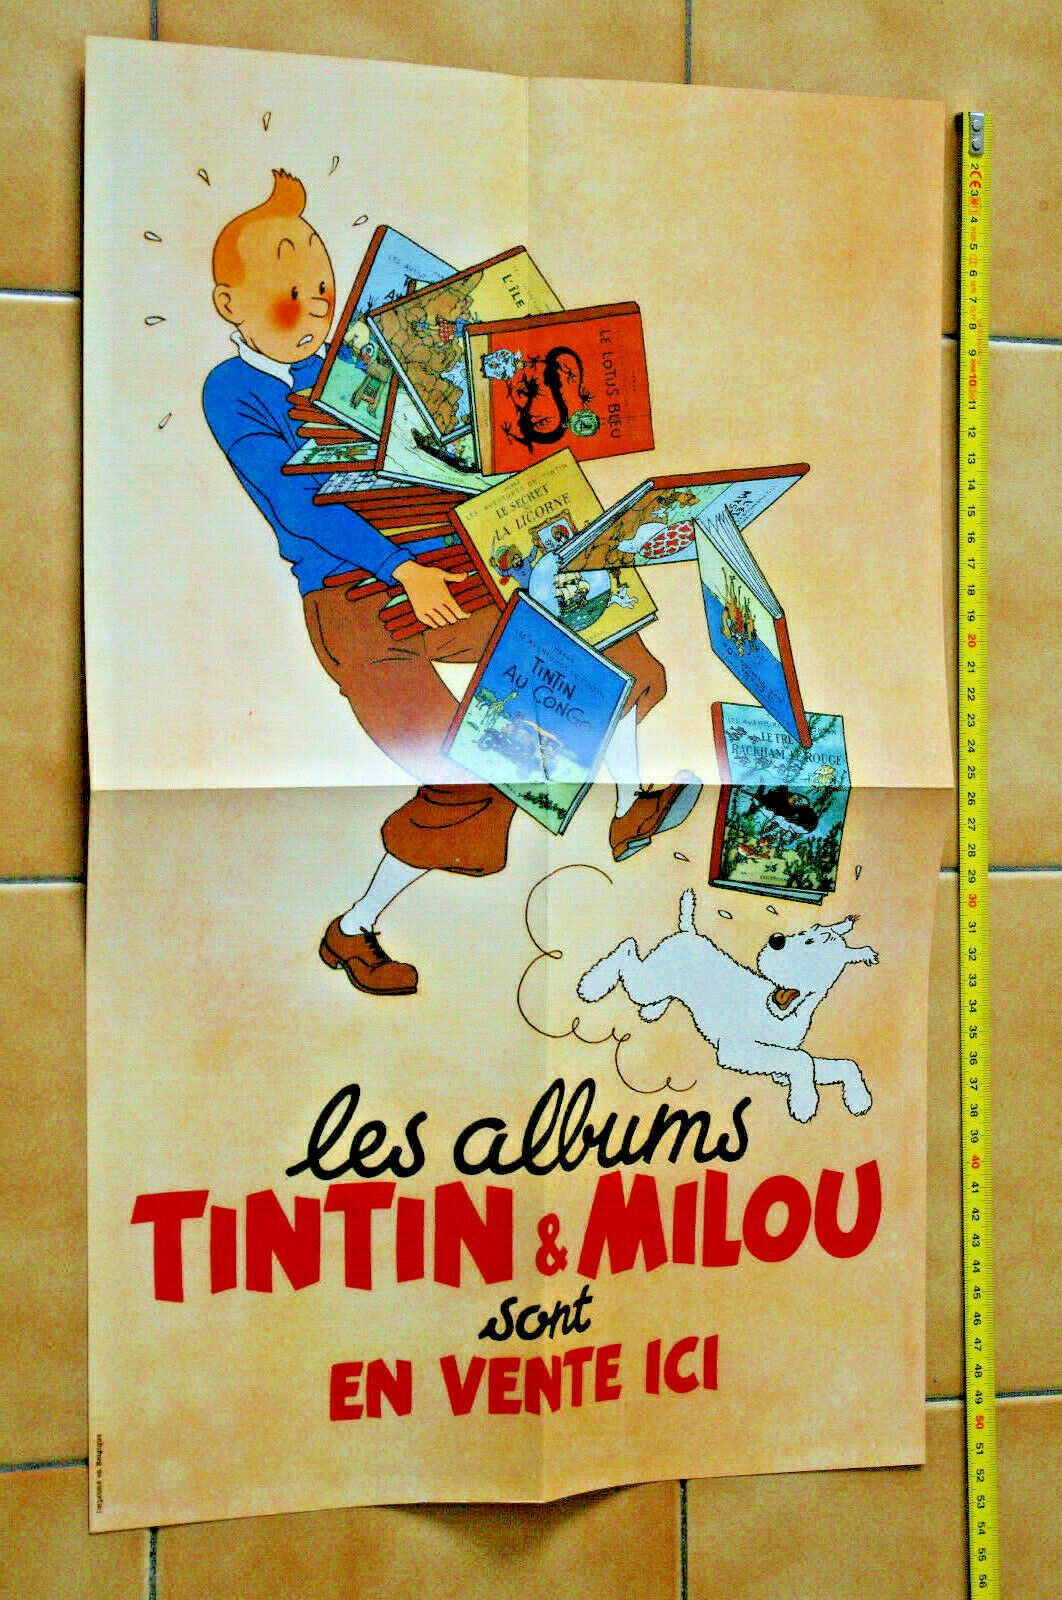 POSTER TINTIN LES ALBUMS TINTIN & MILOU SONT EN VENTE ICI - FAC-SIMILÉ ART PRINT